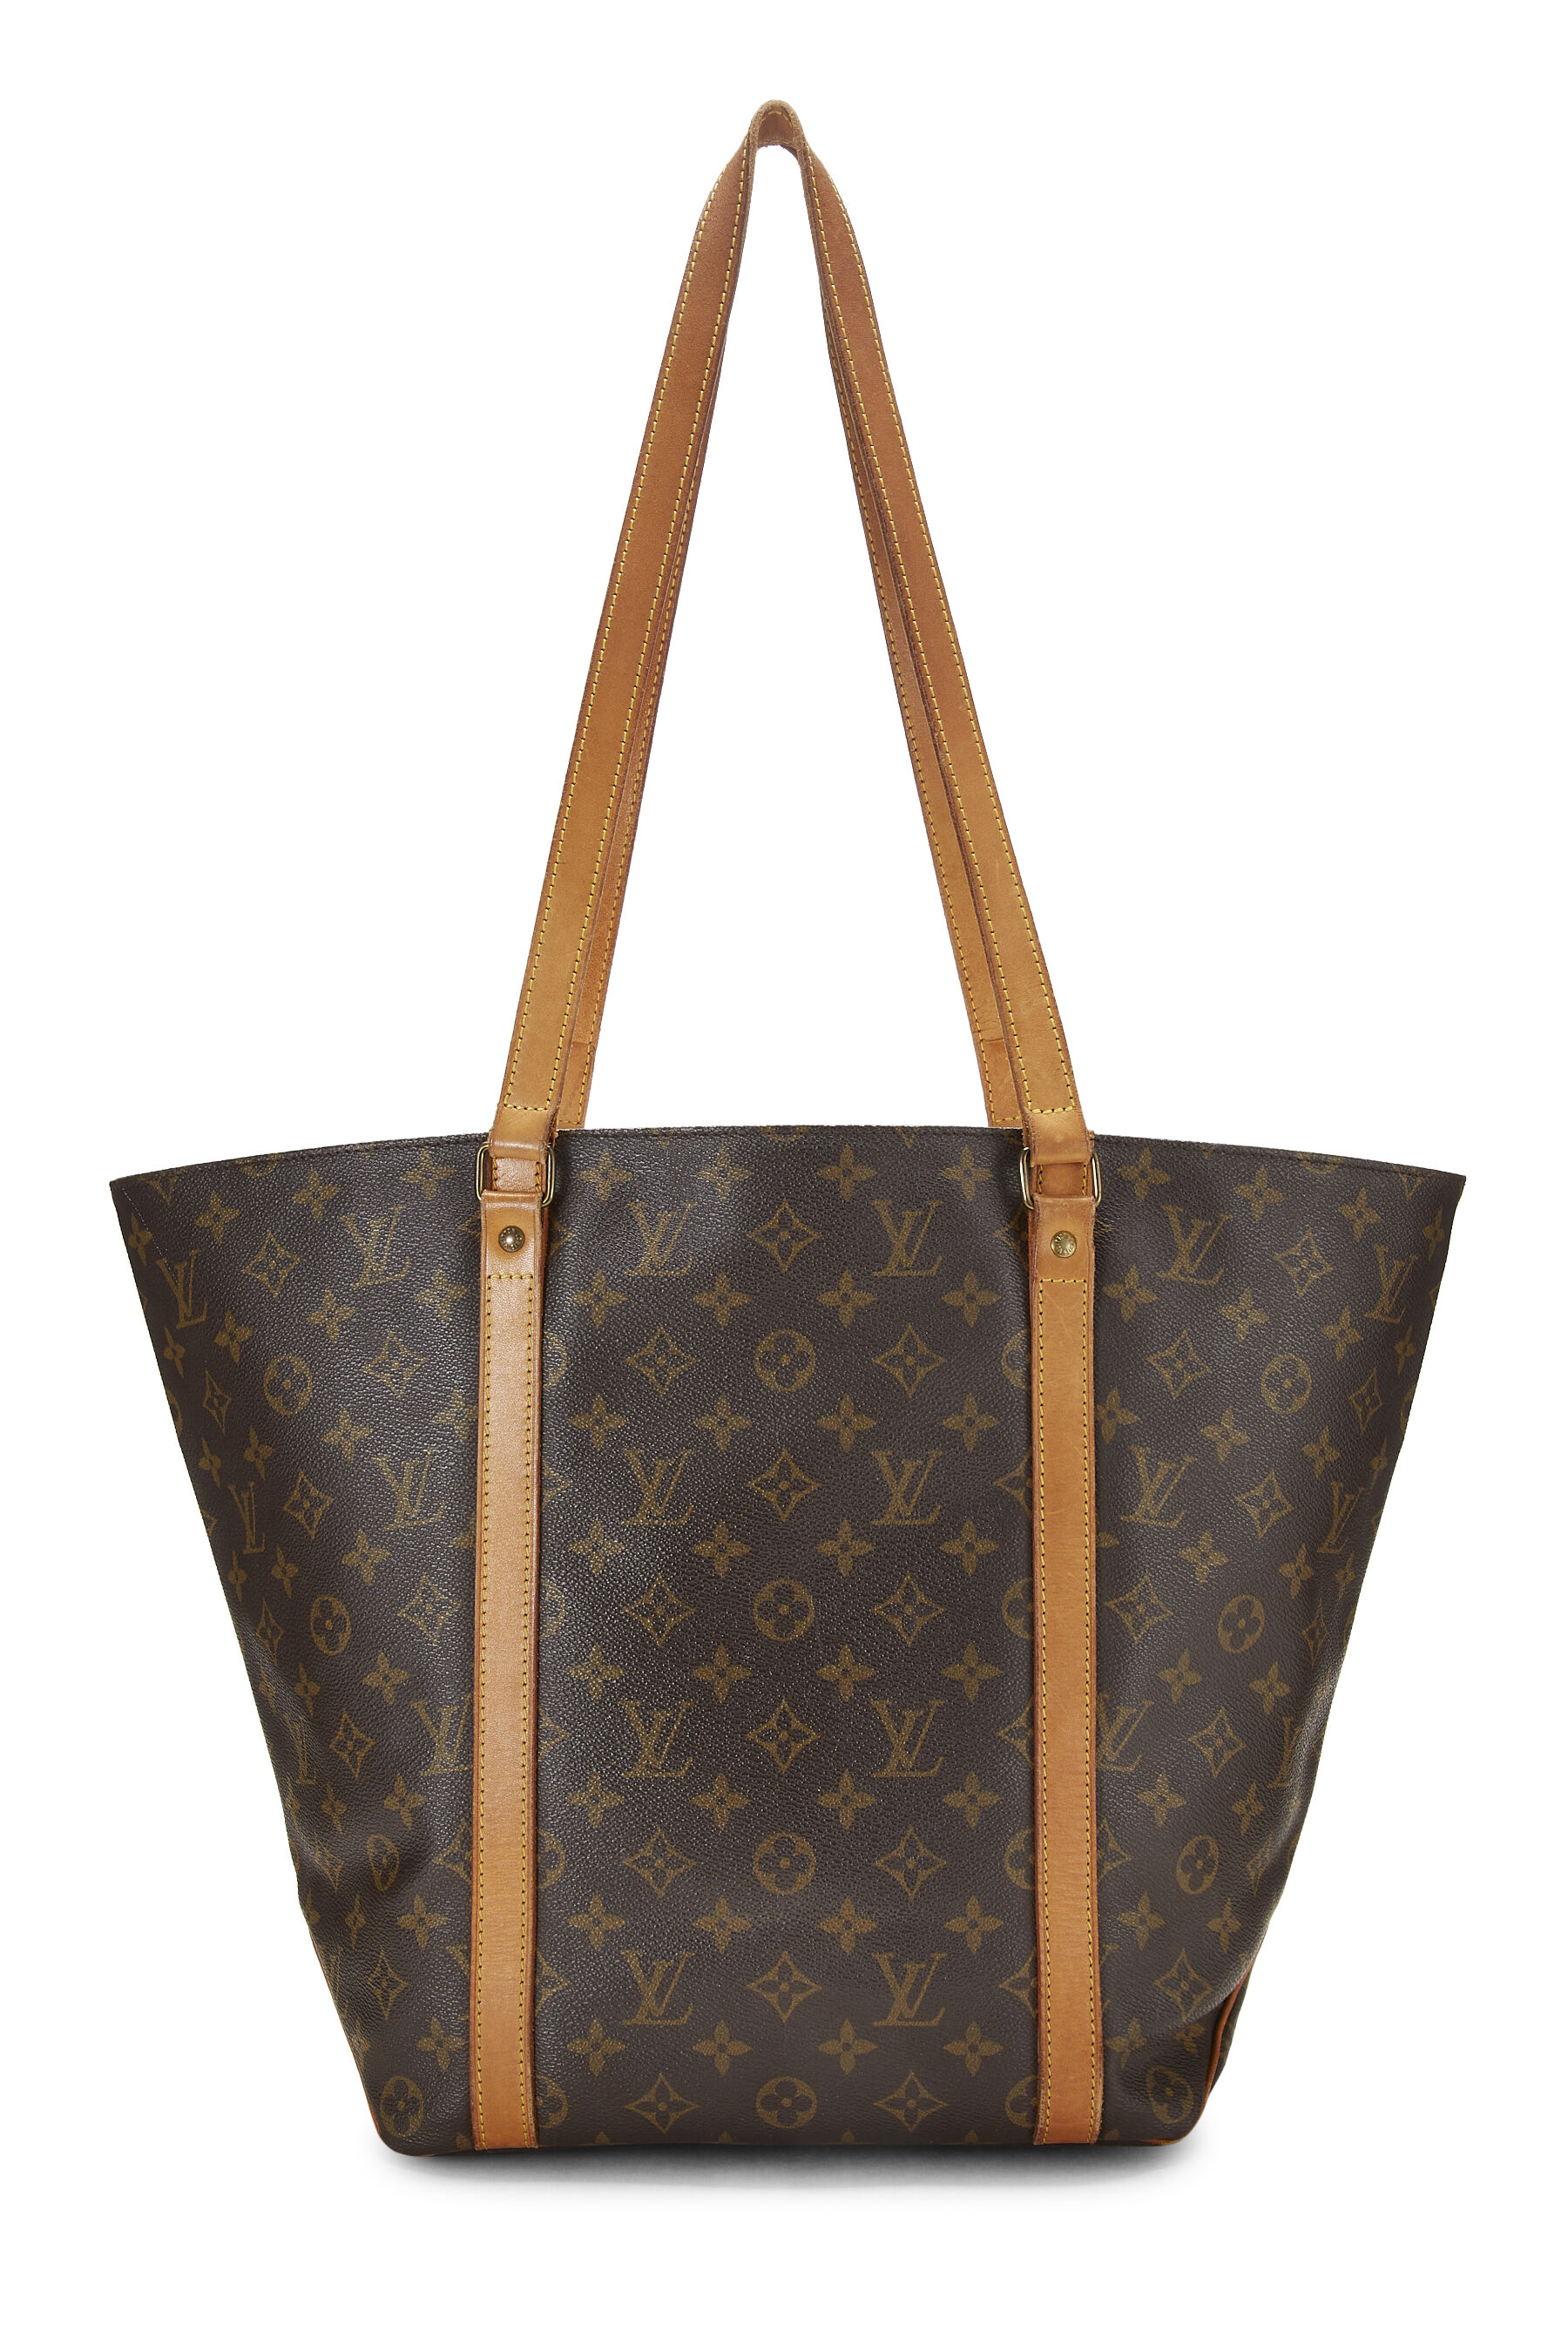 Louis Vuitton Christian Louboutin - Lv Monogram Shopping Bag